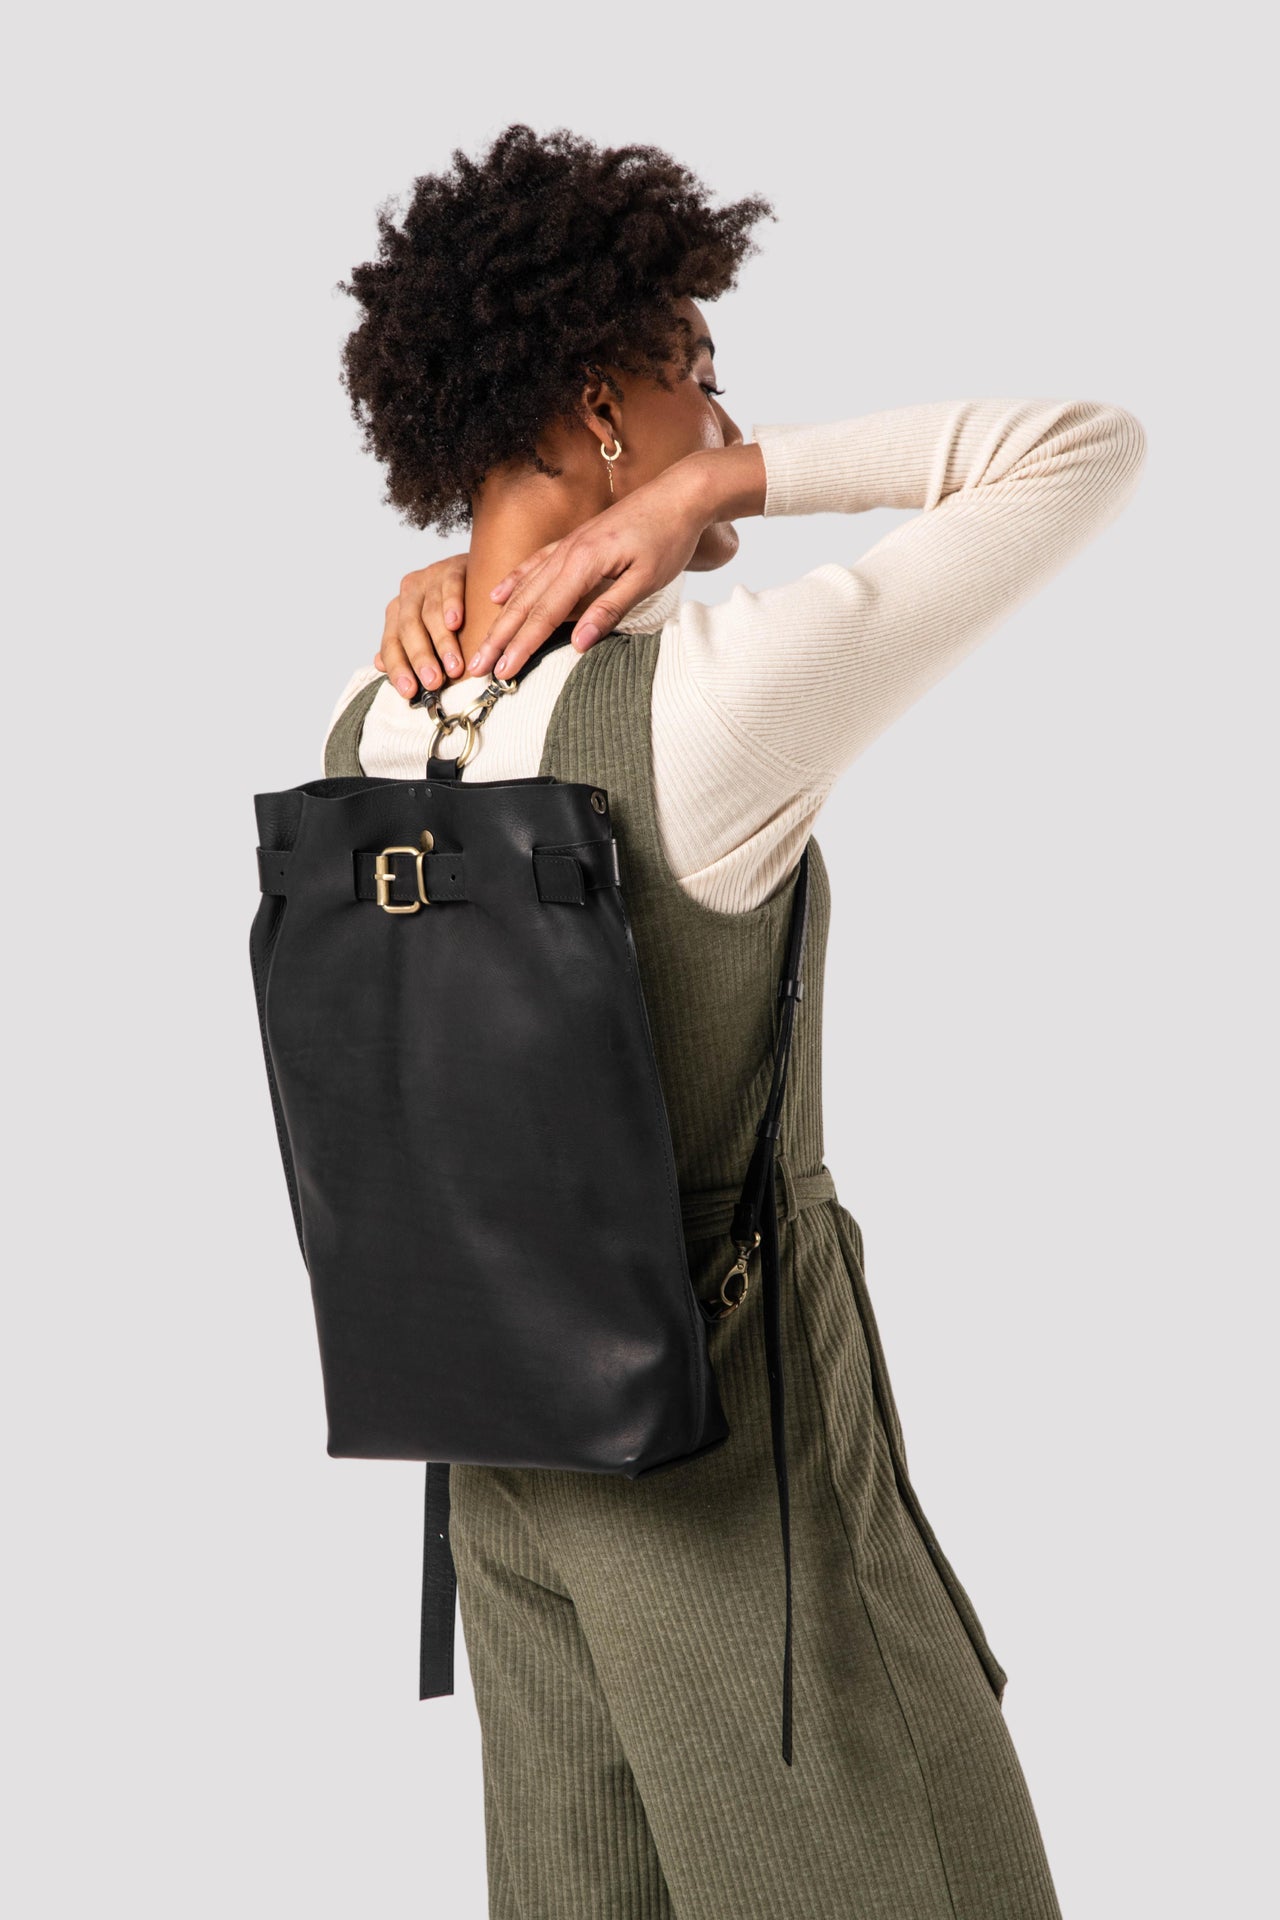 Handmade Women's black Leather backpack purse